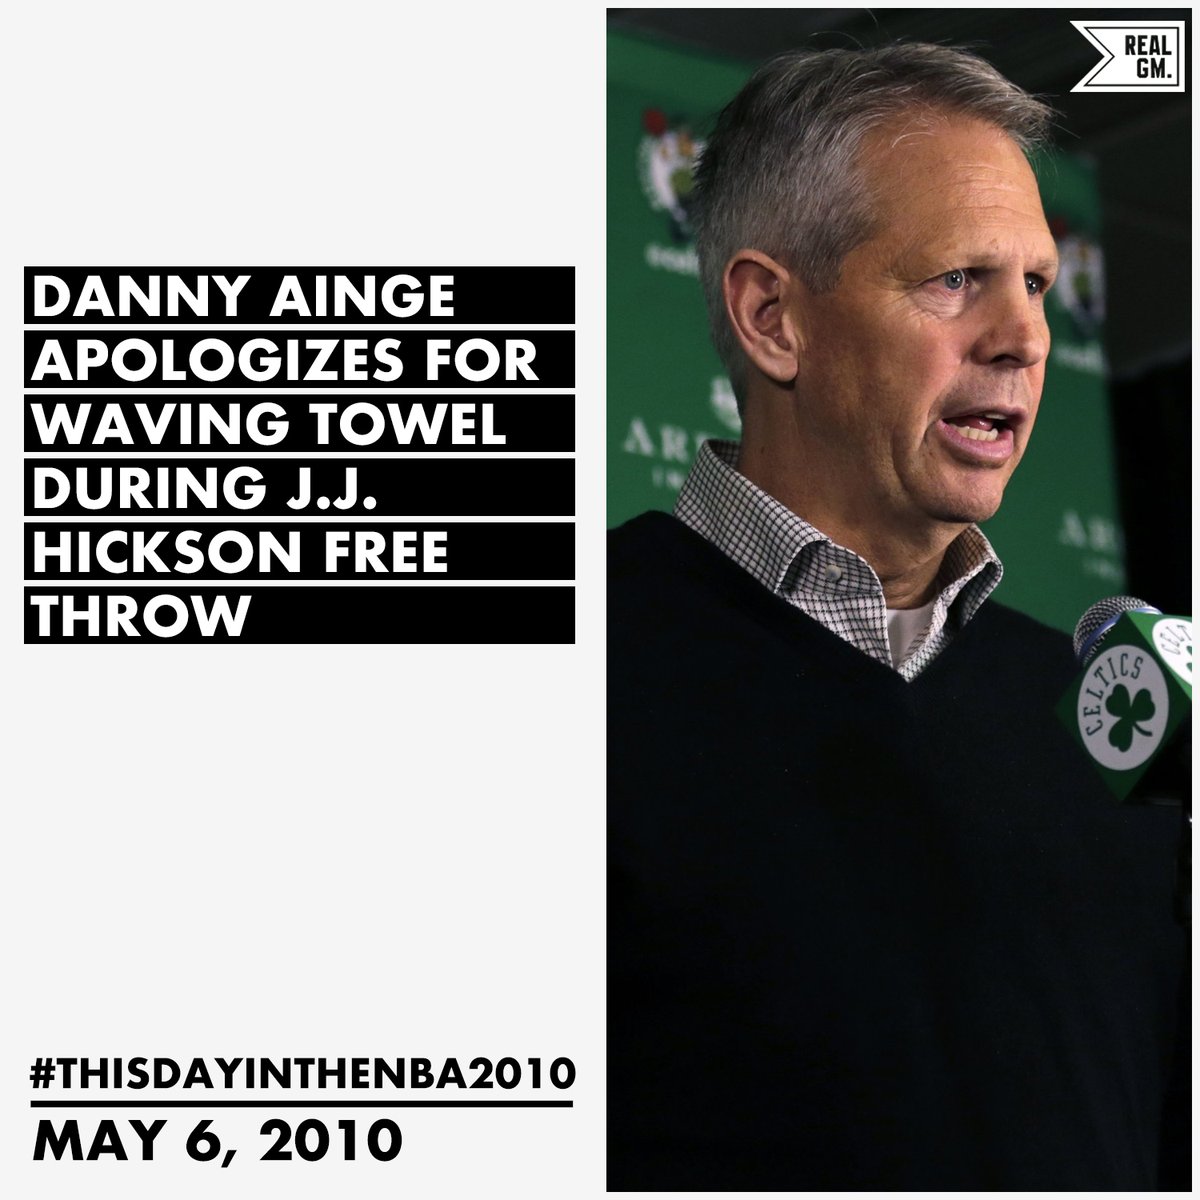  #ThisDayInTheNBA2010May 6, 2010Danny Ainge Apologizes For Waving Towel During J.J. Hickson Free Throw https://basketball.realgm.com/wiretap/203728/Danny-Ainge-Apologizes-For-Waving-Towel-During-JJ-Hickson-Free-Throw